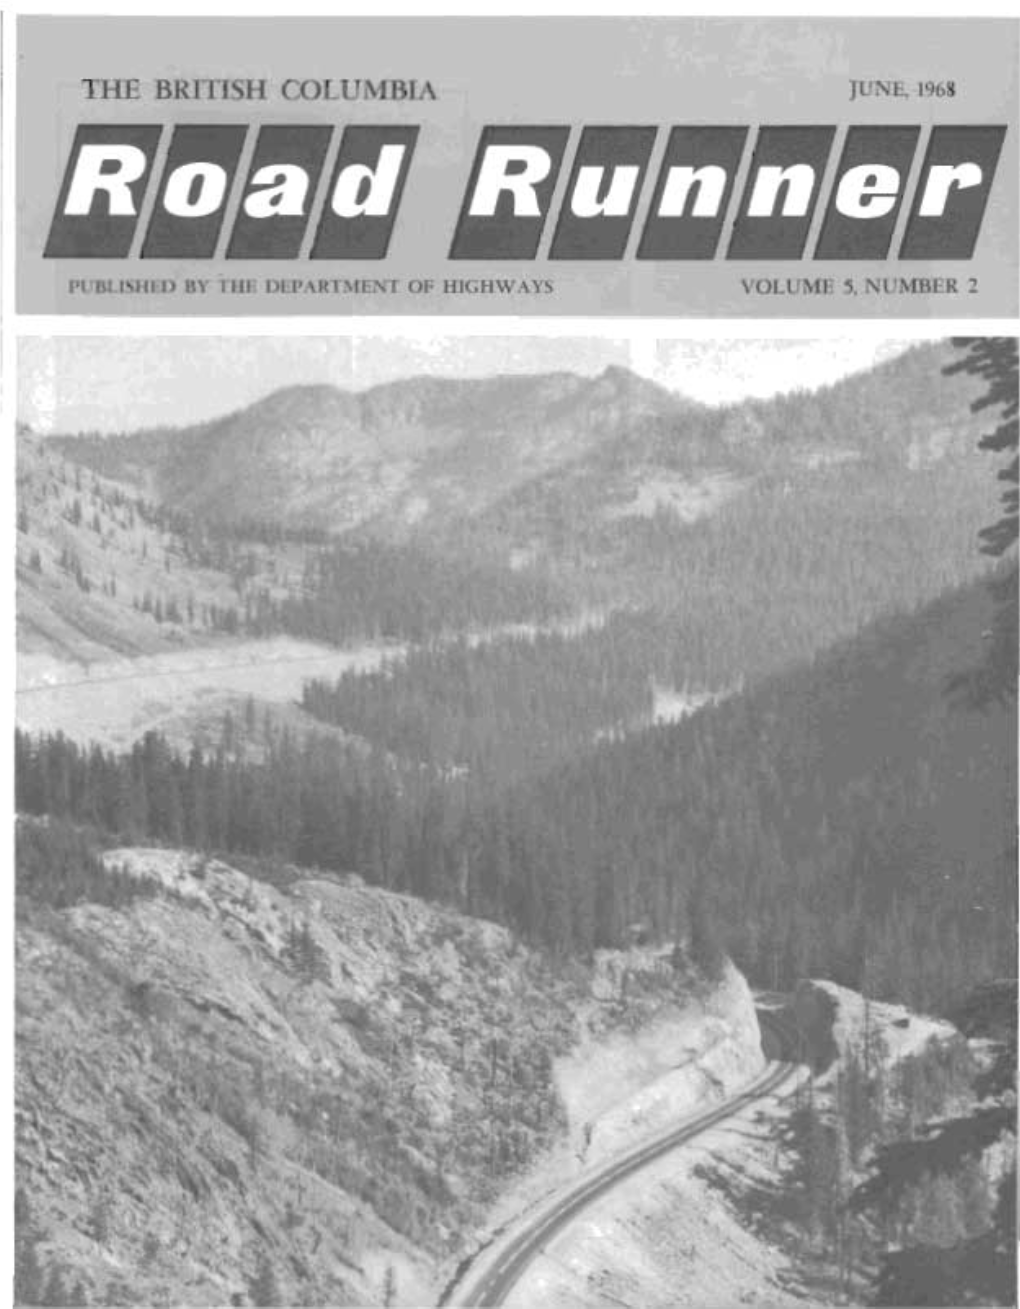 The British Columbia Road Runner, June 1968, Volume 5, Number 2